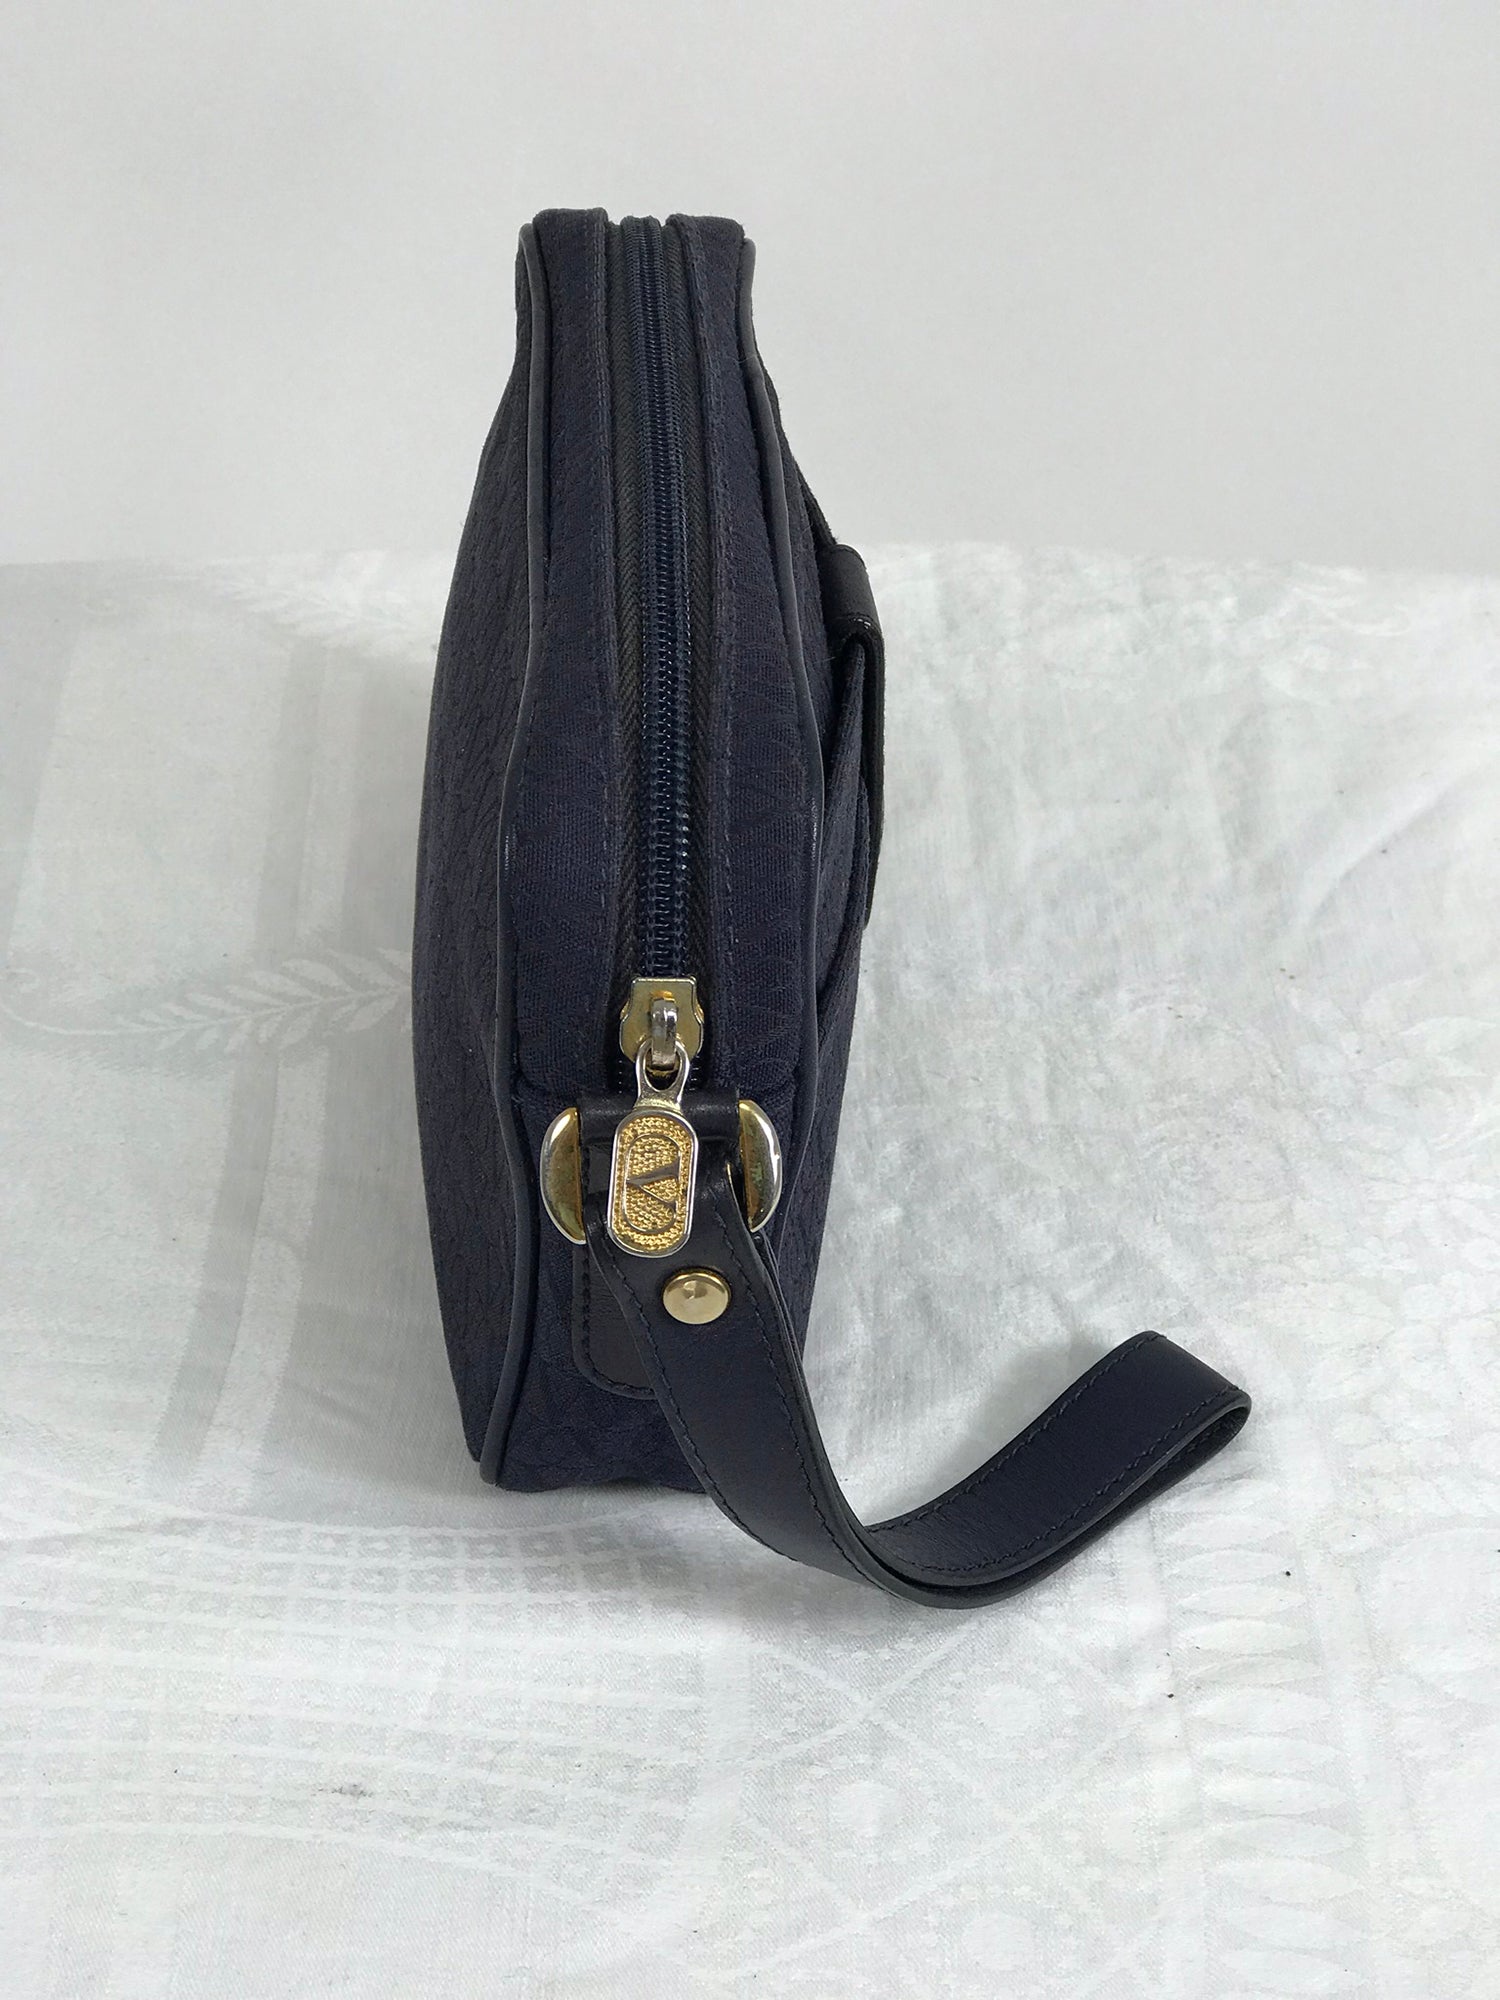 Valentino Bags - DIVINA - V tassel Chain strap clutch bag - Navy